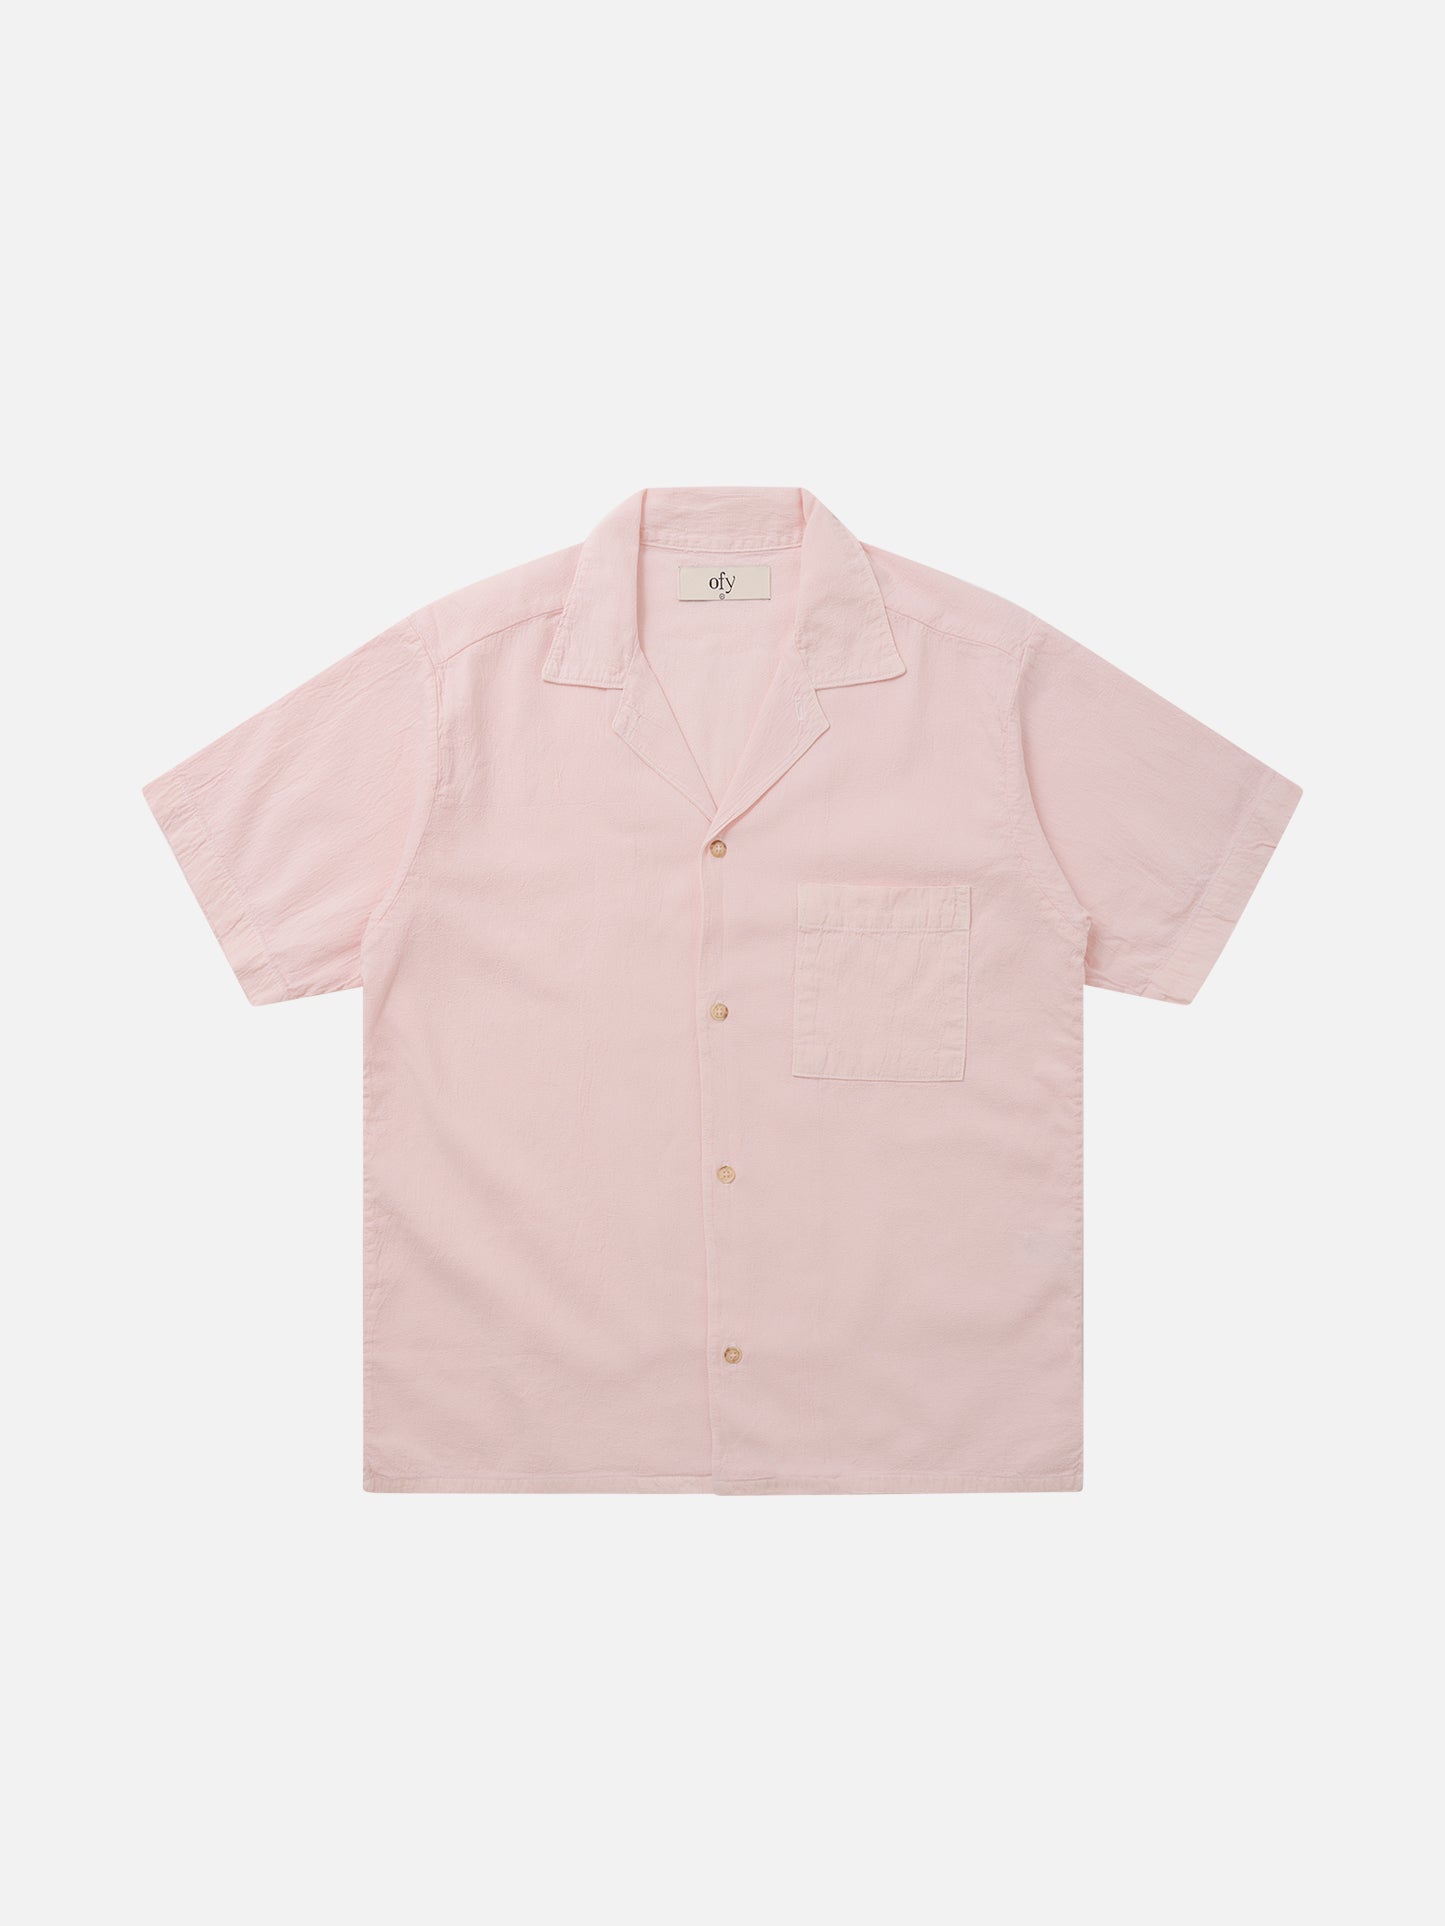 Horizon Crinkle S/S Shirt - Coconut Cream